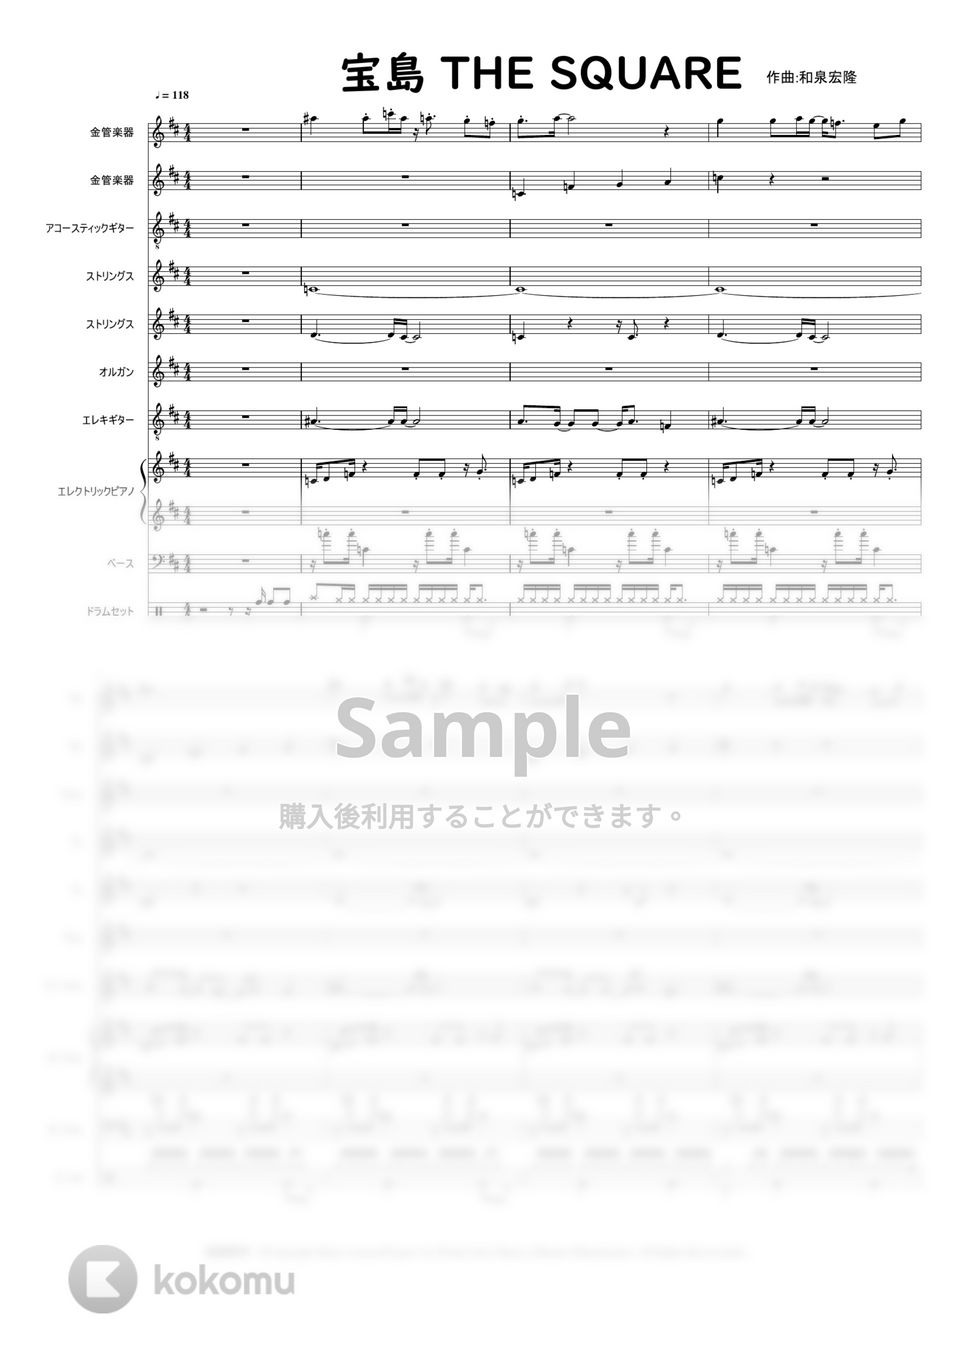 THE SQUARE 作曲:和泉宏隆 - 宝島 by Mitsuru Minamiyama